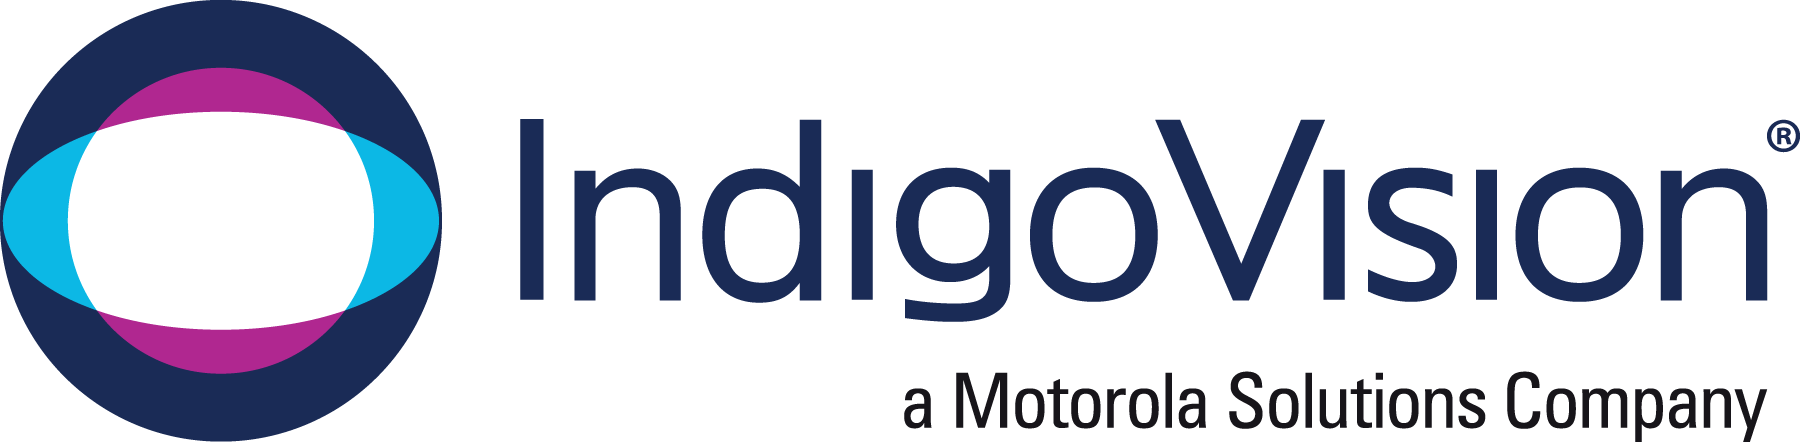 cambridge sound management logo